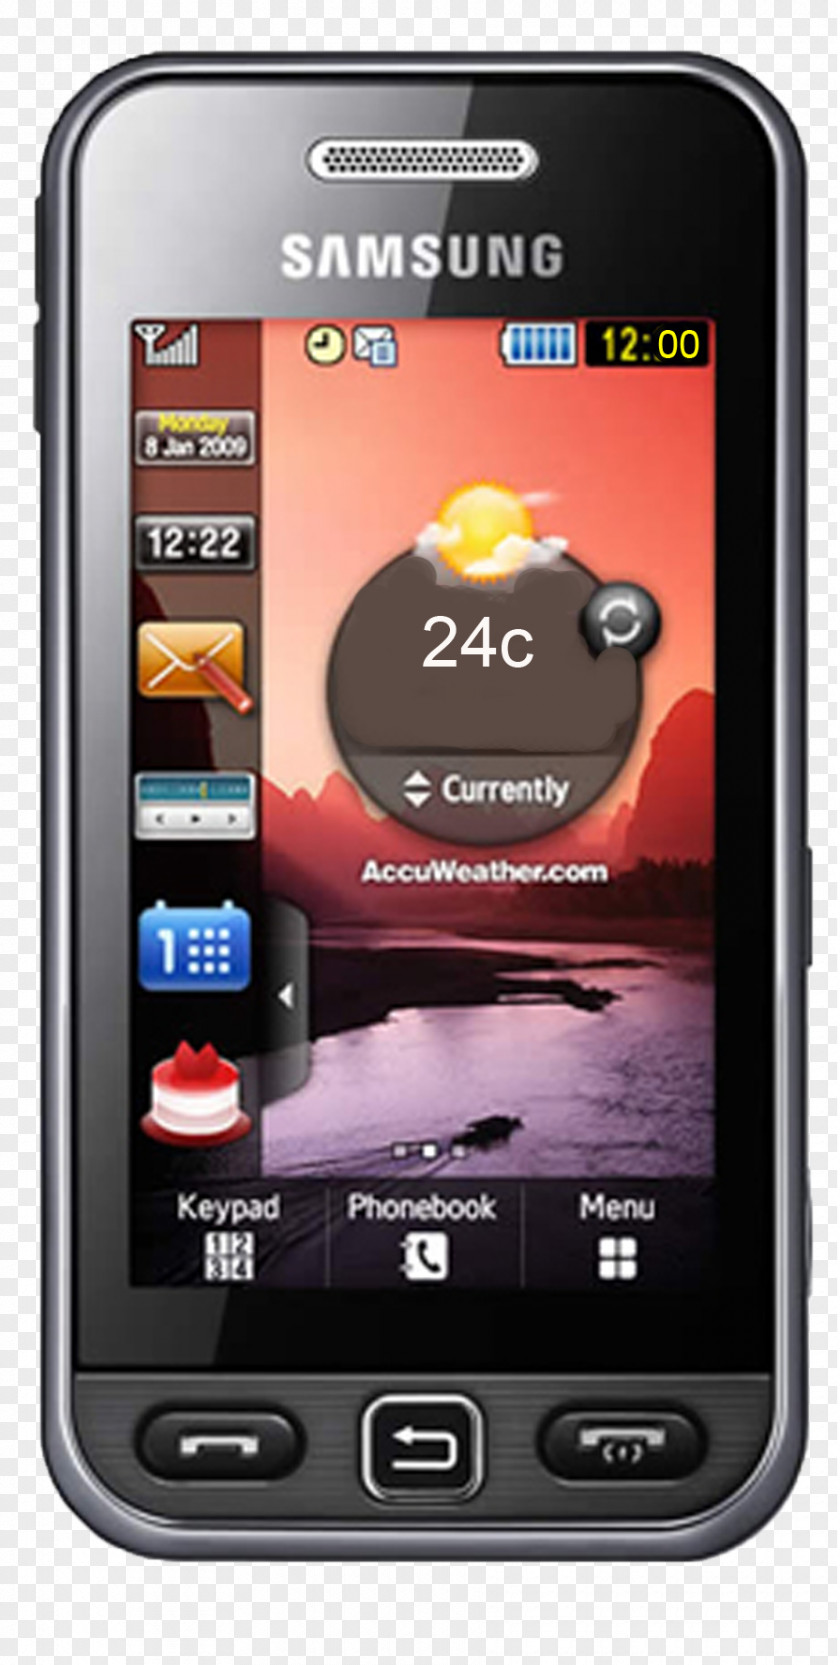 Samsung Mobile Phone Pic S5230 Galaxy I8510 I8000 I8910 PNG